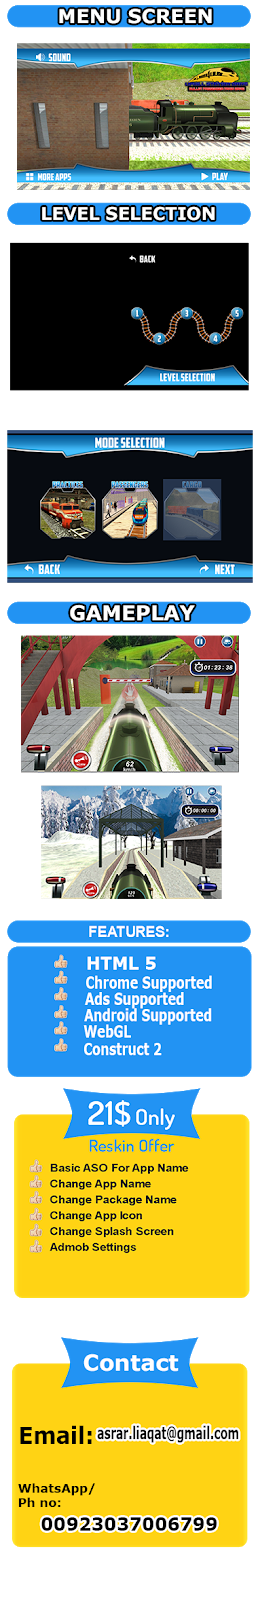 Metro train simulator arcade HTML5 game source code - 1